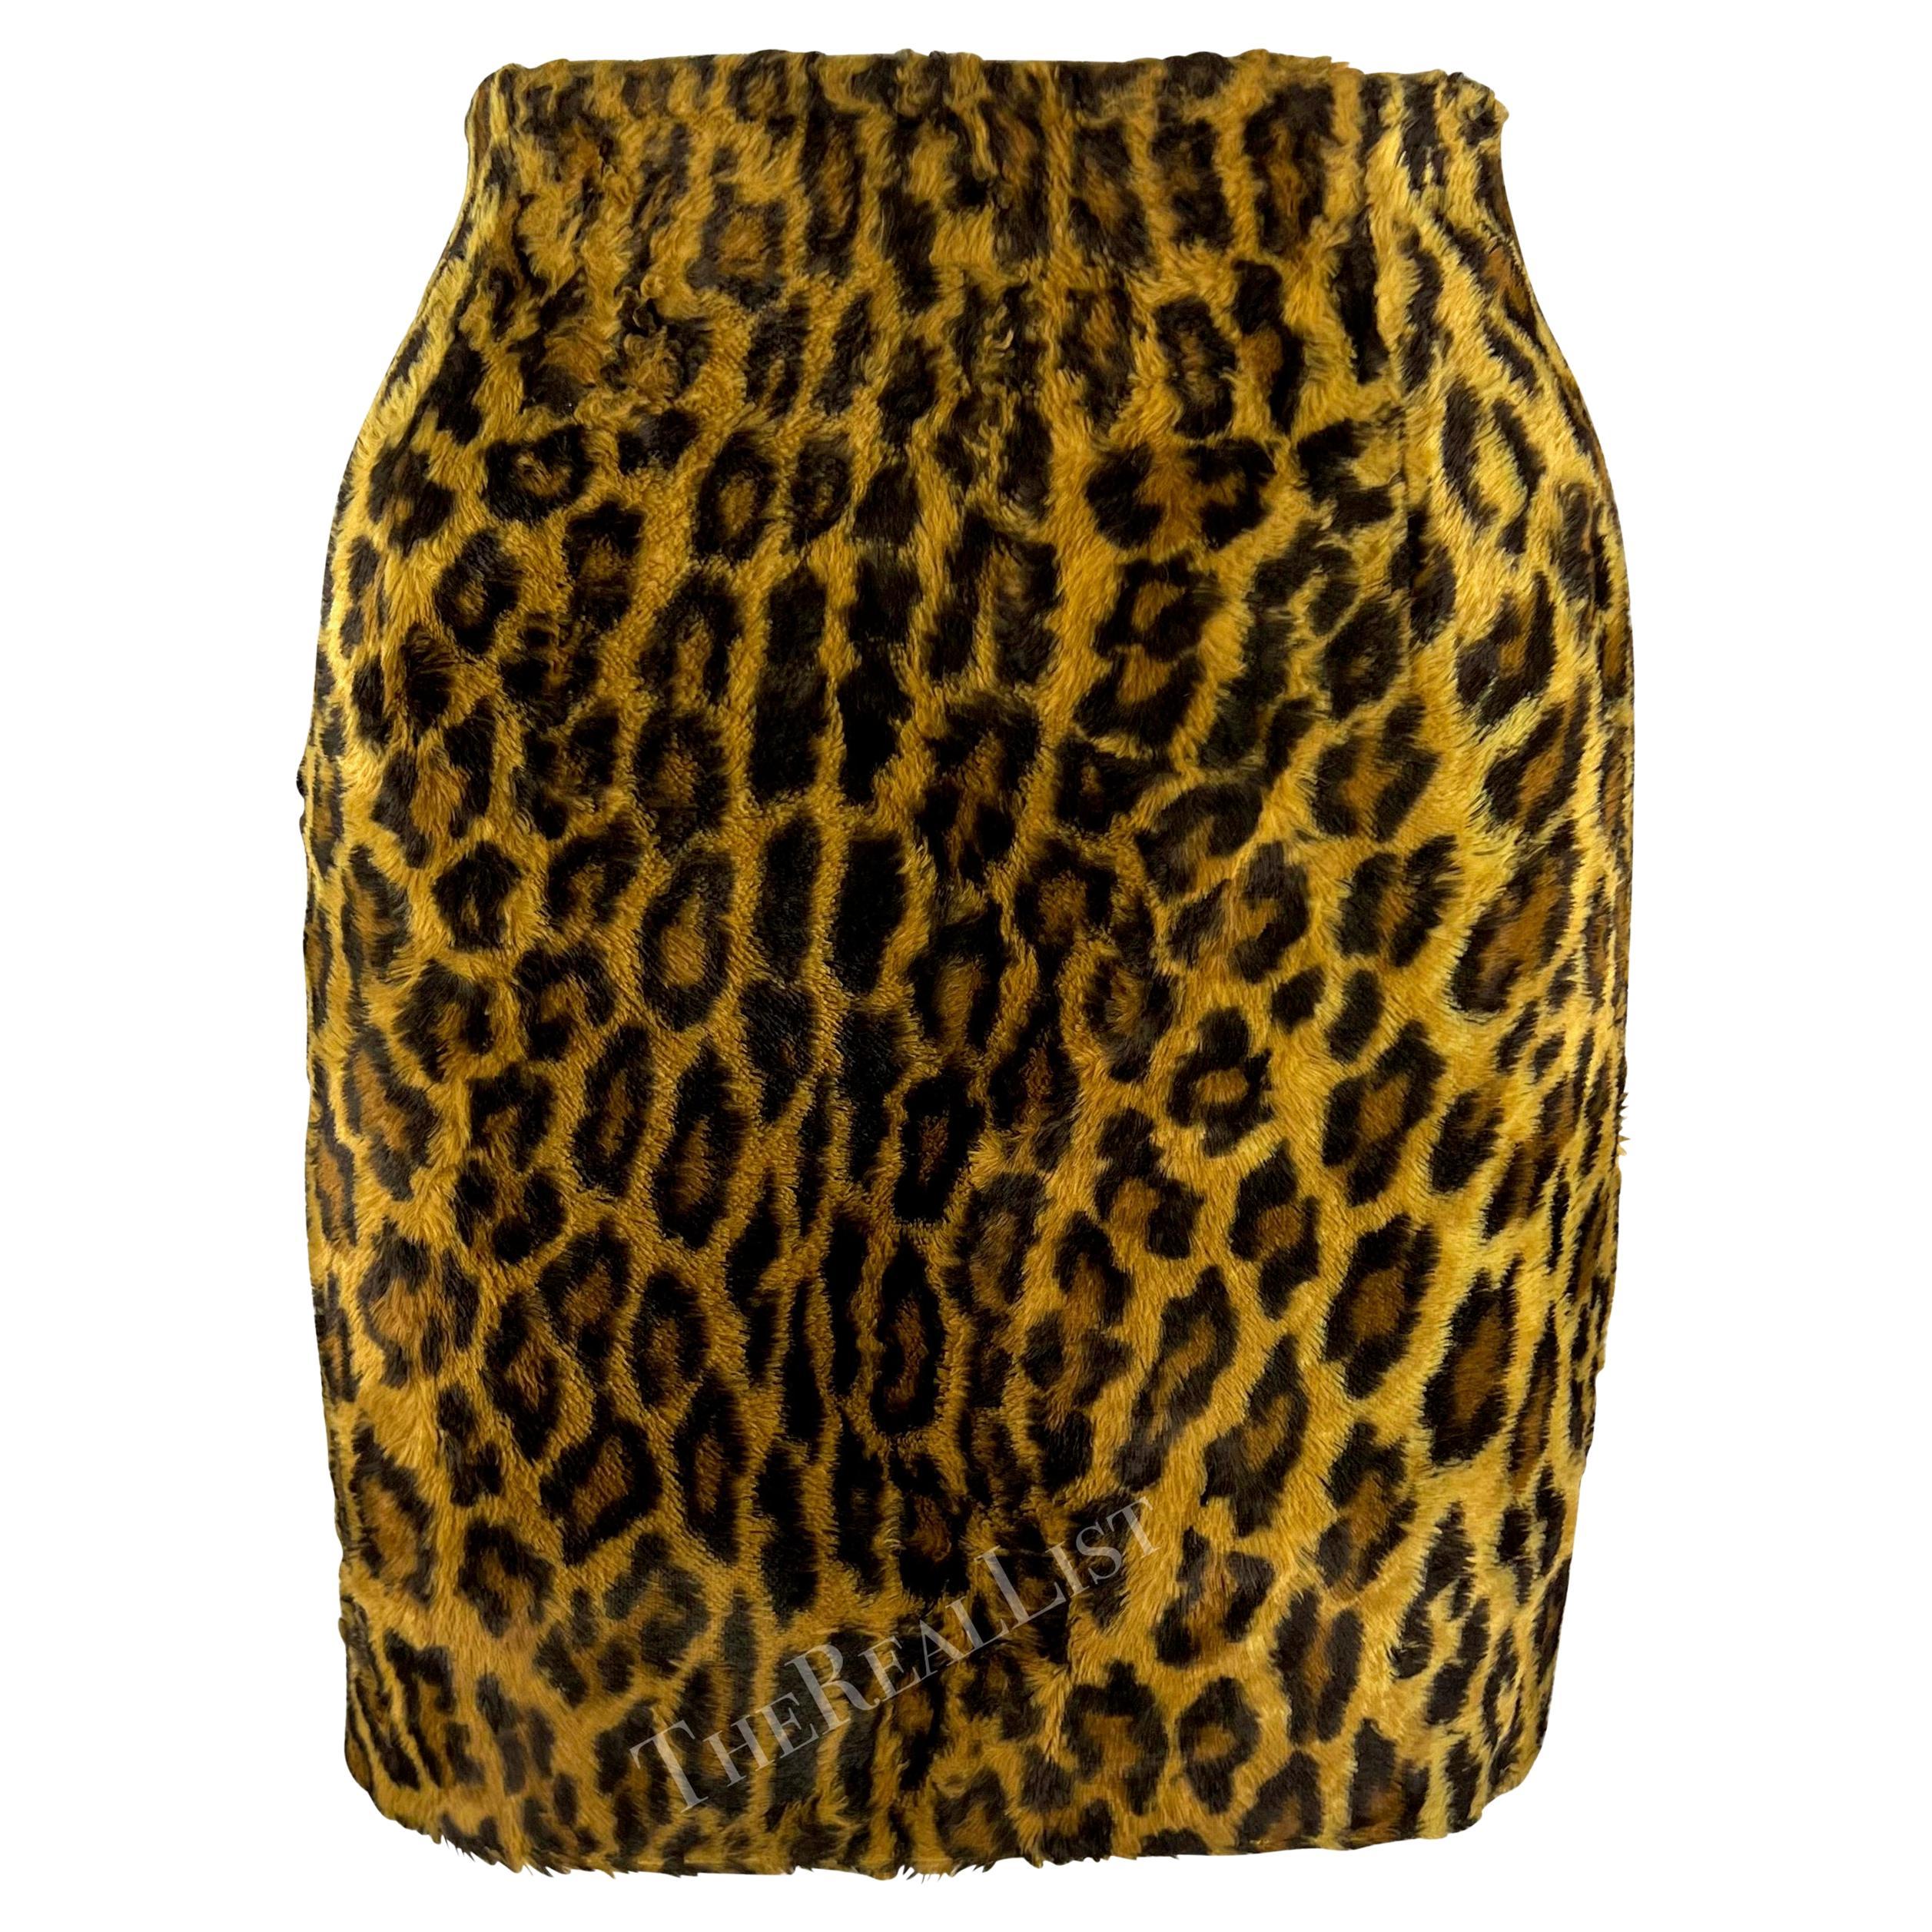 F/W 1994 Gianni Versace Couture Cheetah Print Faux Fur Mini Skirt  For Sale